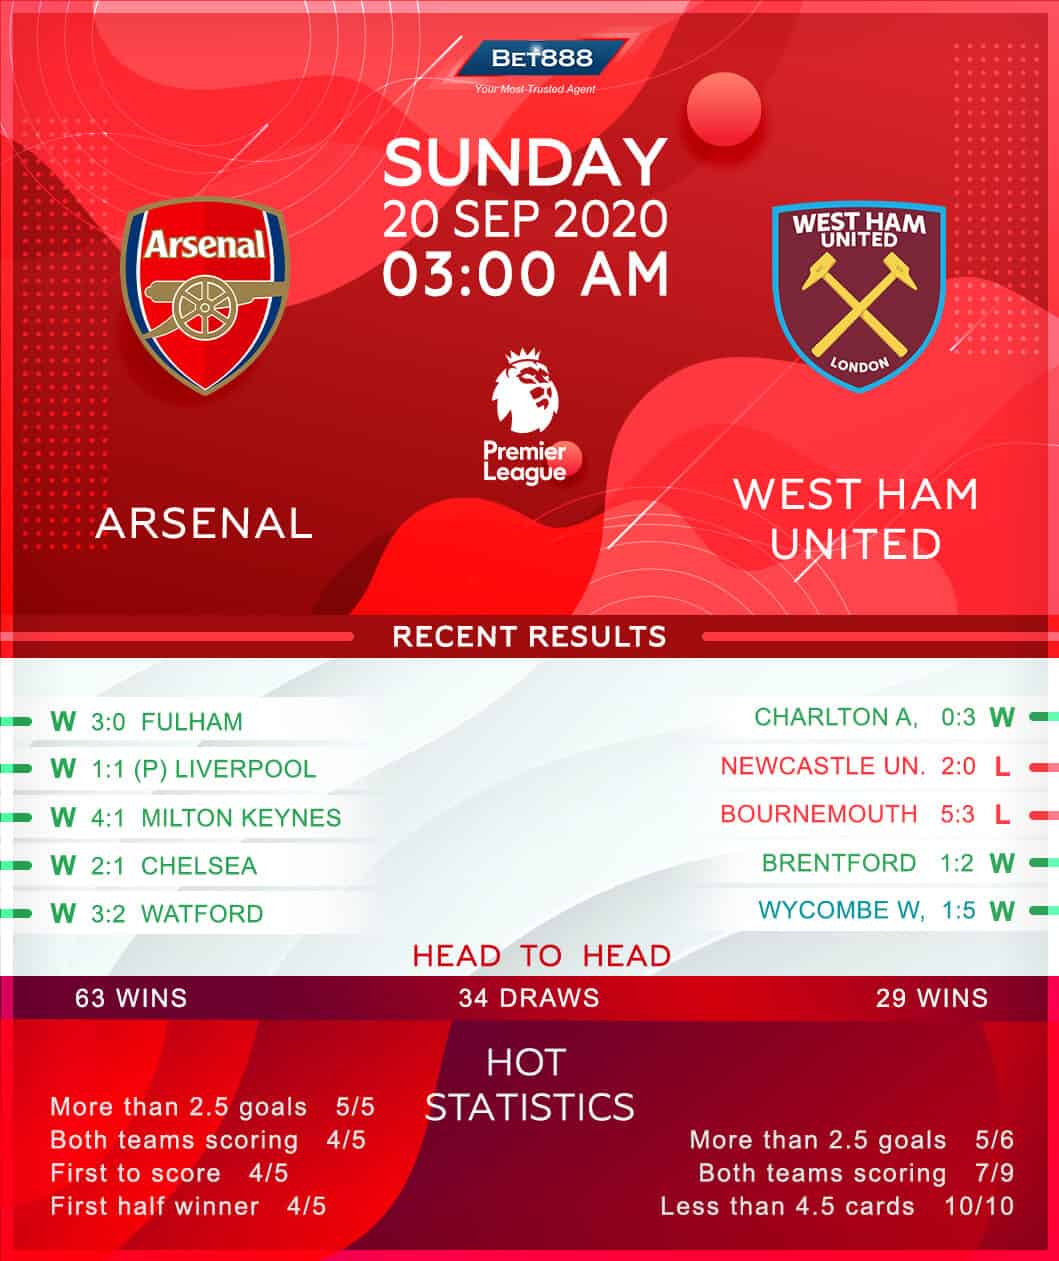 Arsenal vs West Ham United 20/09/20